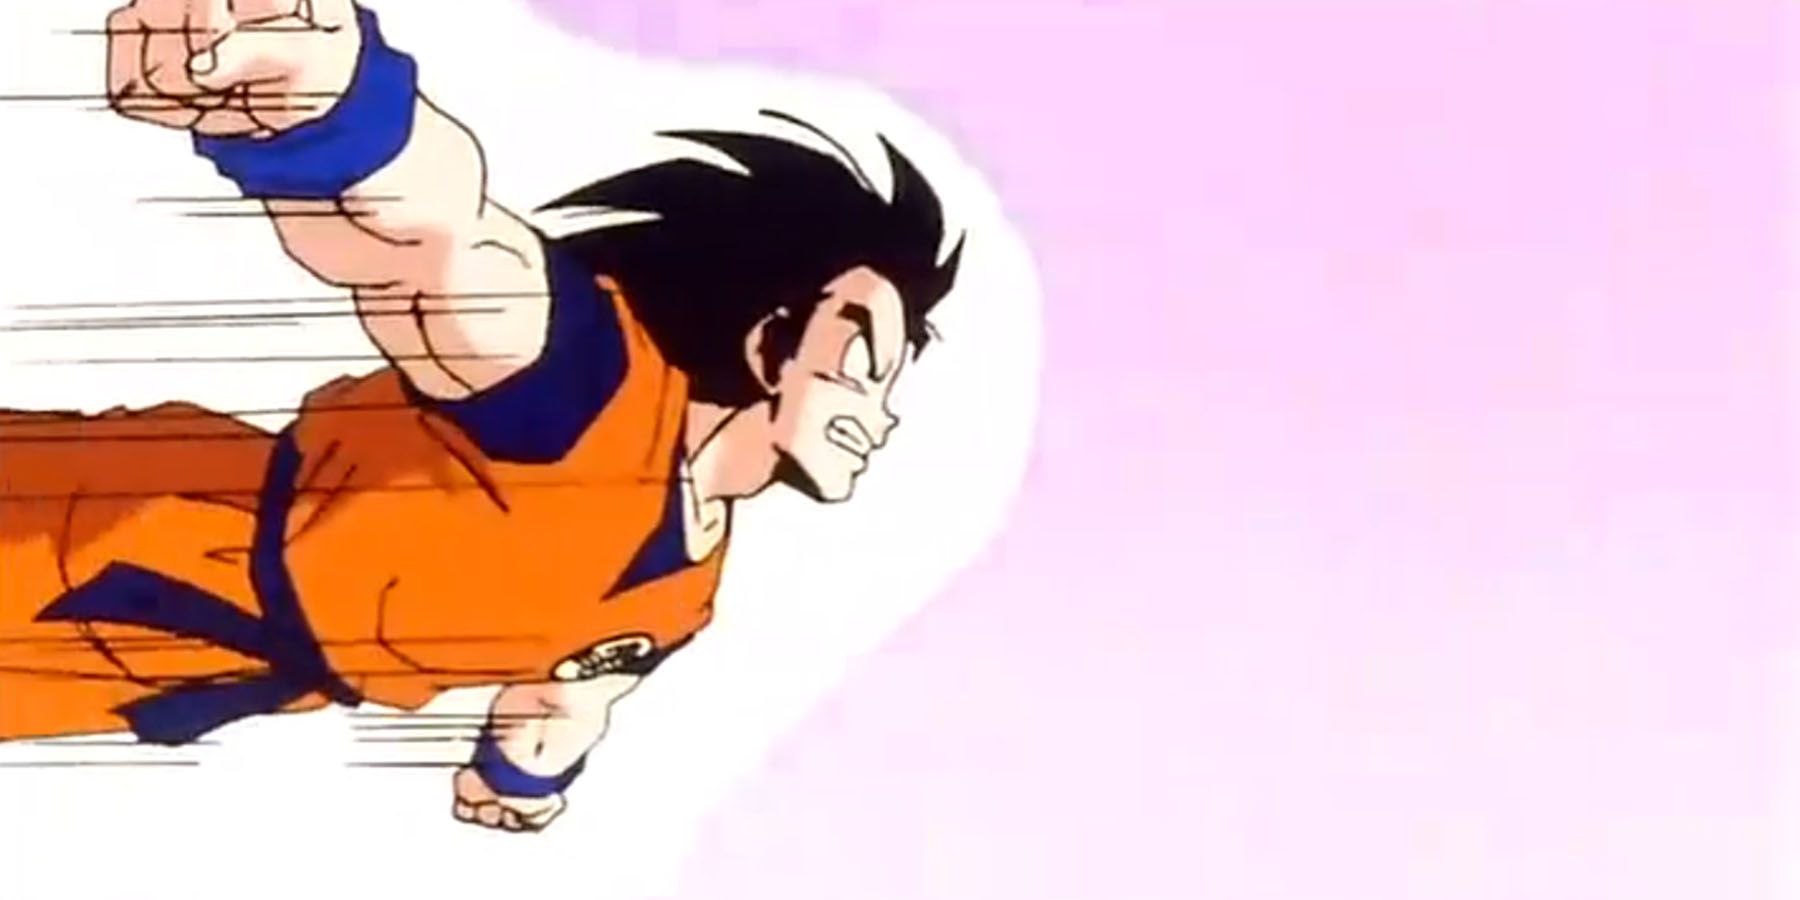 Goku Flying At Full Speed